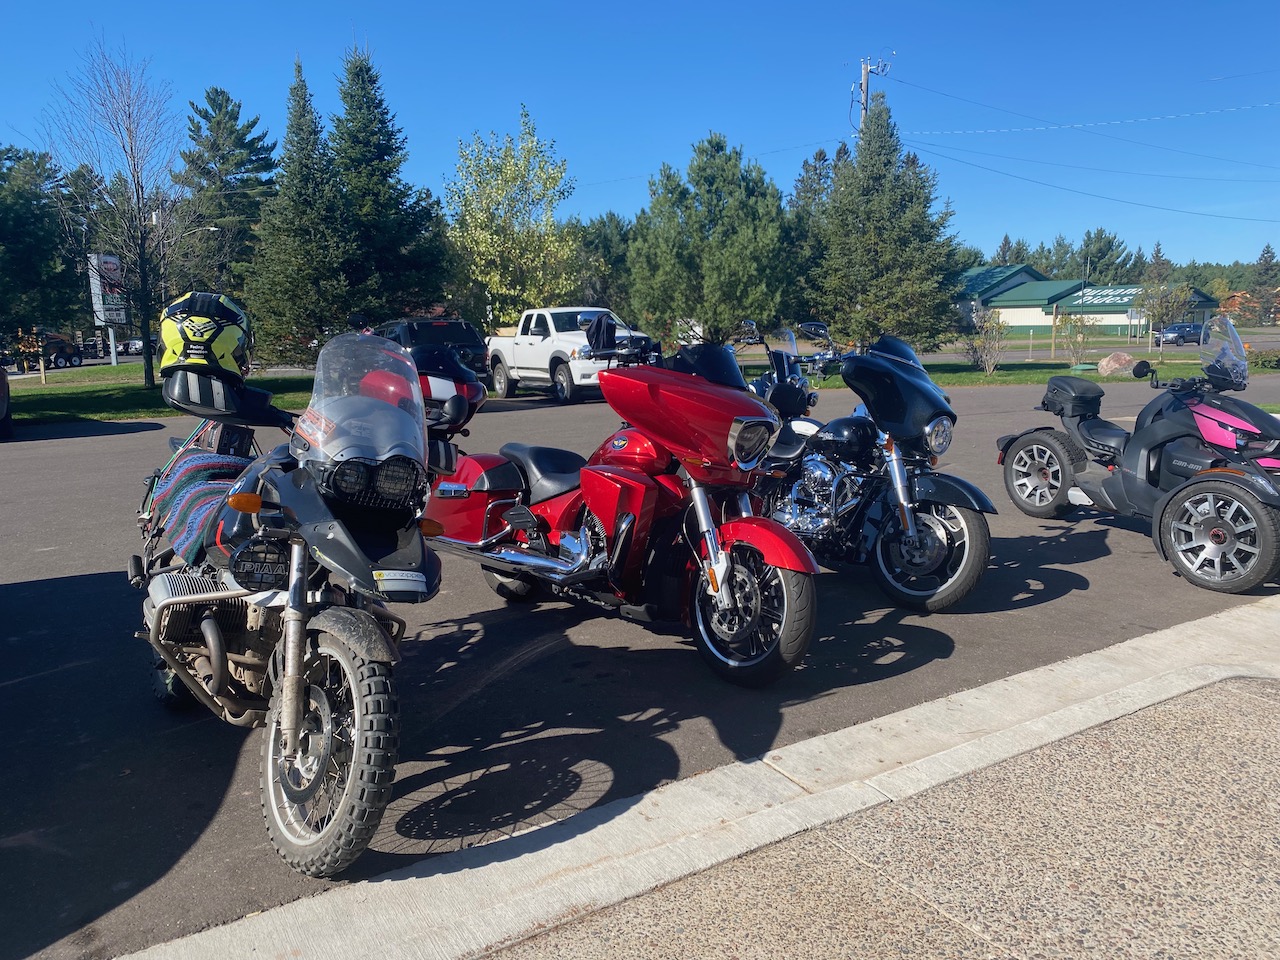 Motorcycles parked at Lakewoods Resort